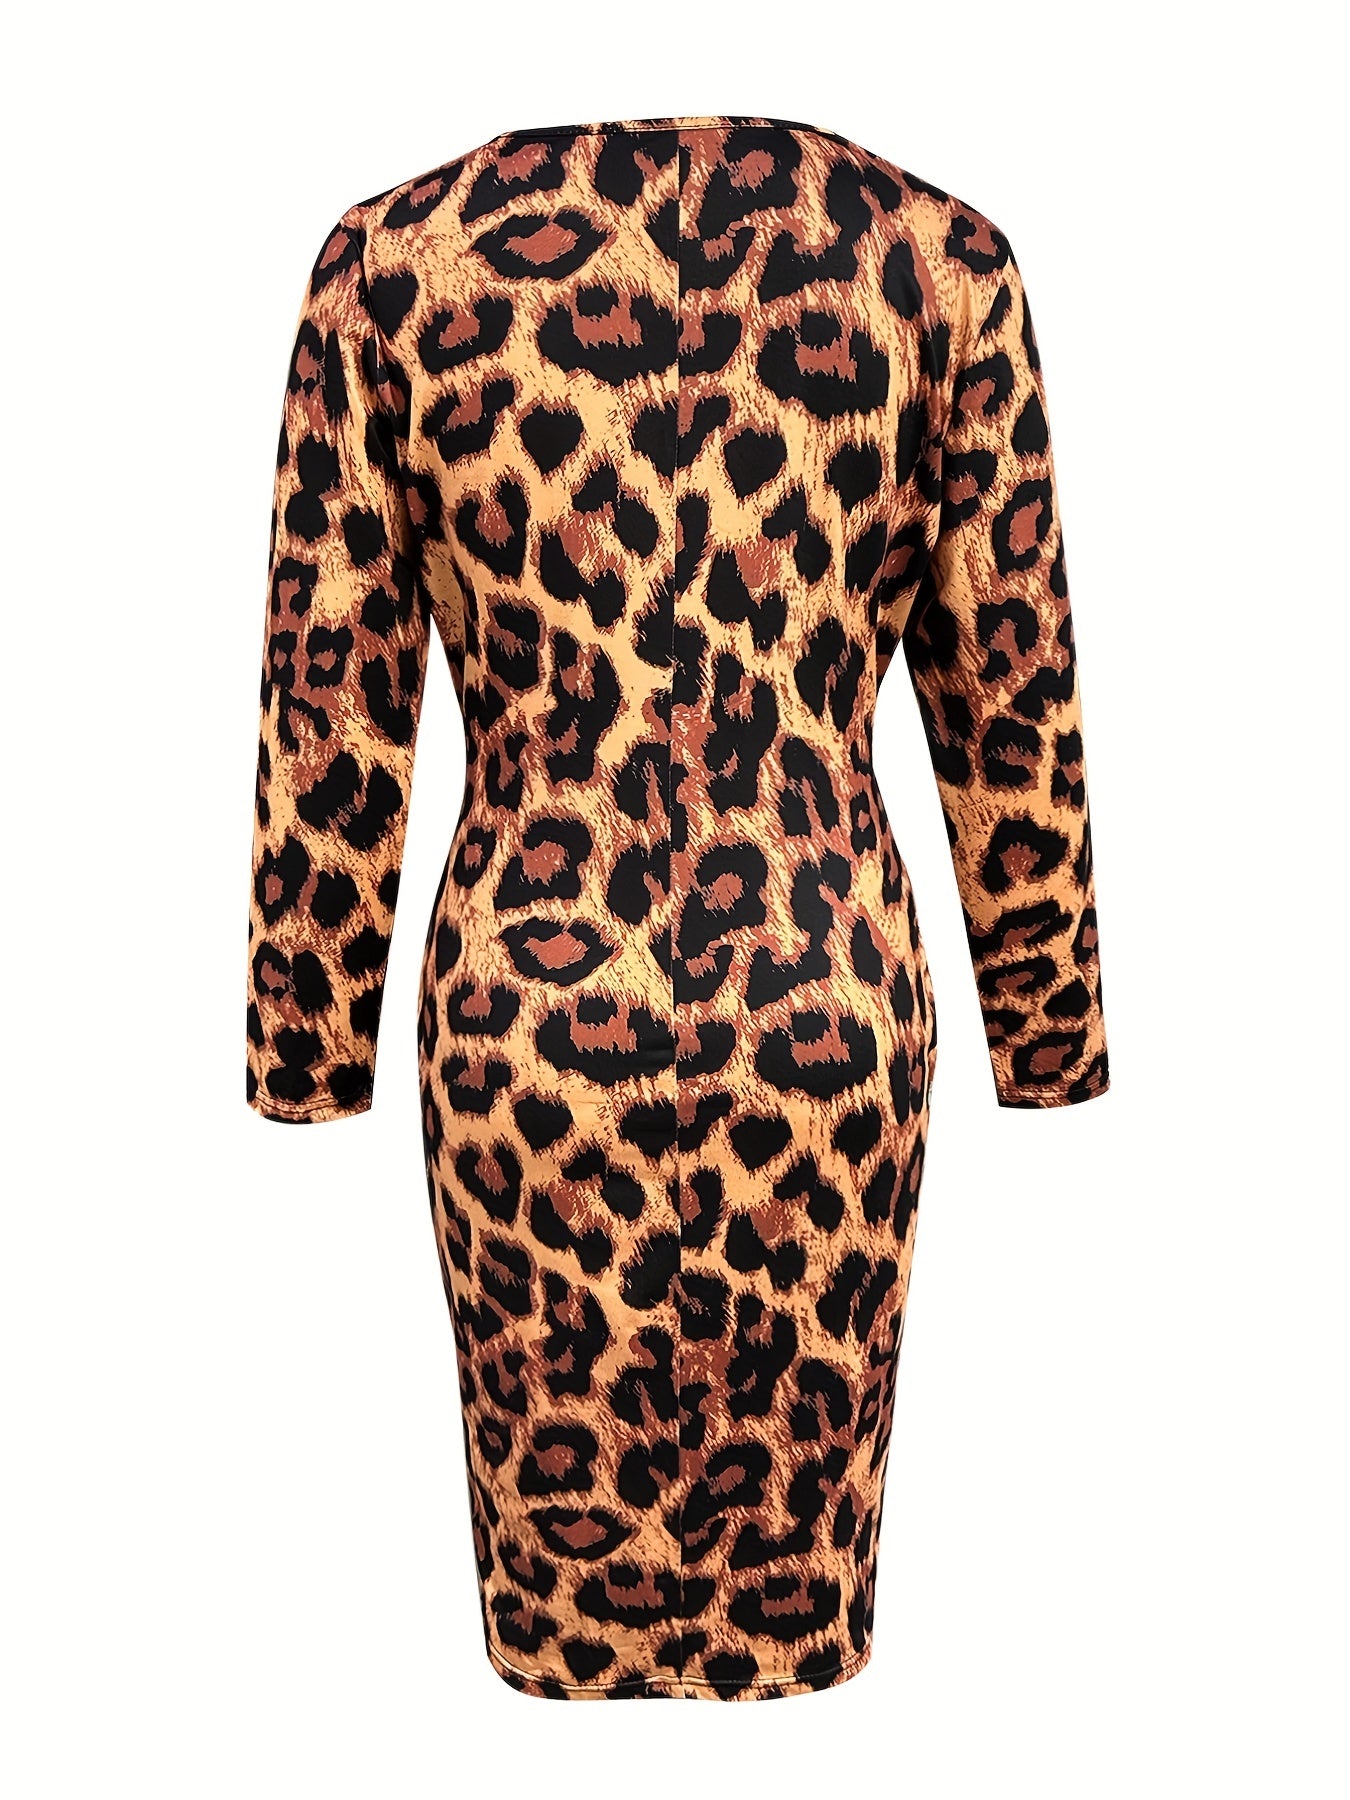 vlovelaw  Leopard Print Bodycon Dress, Sexy Long Sleeve Surplice Neck Dress, Women's Clothing